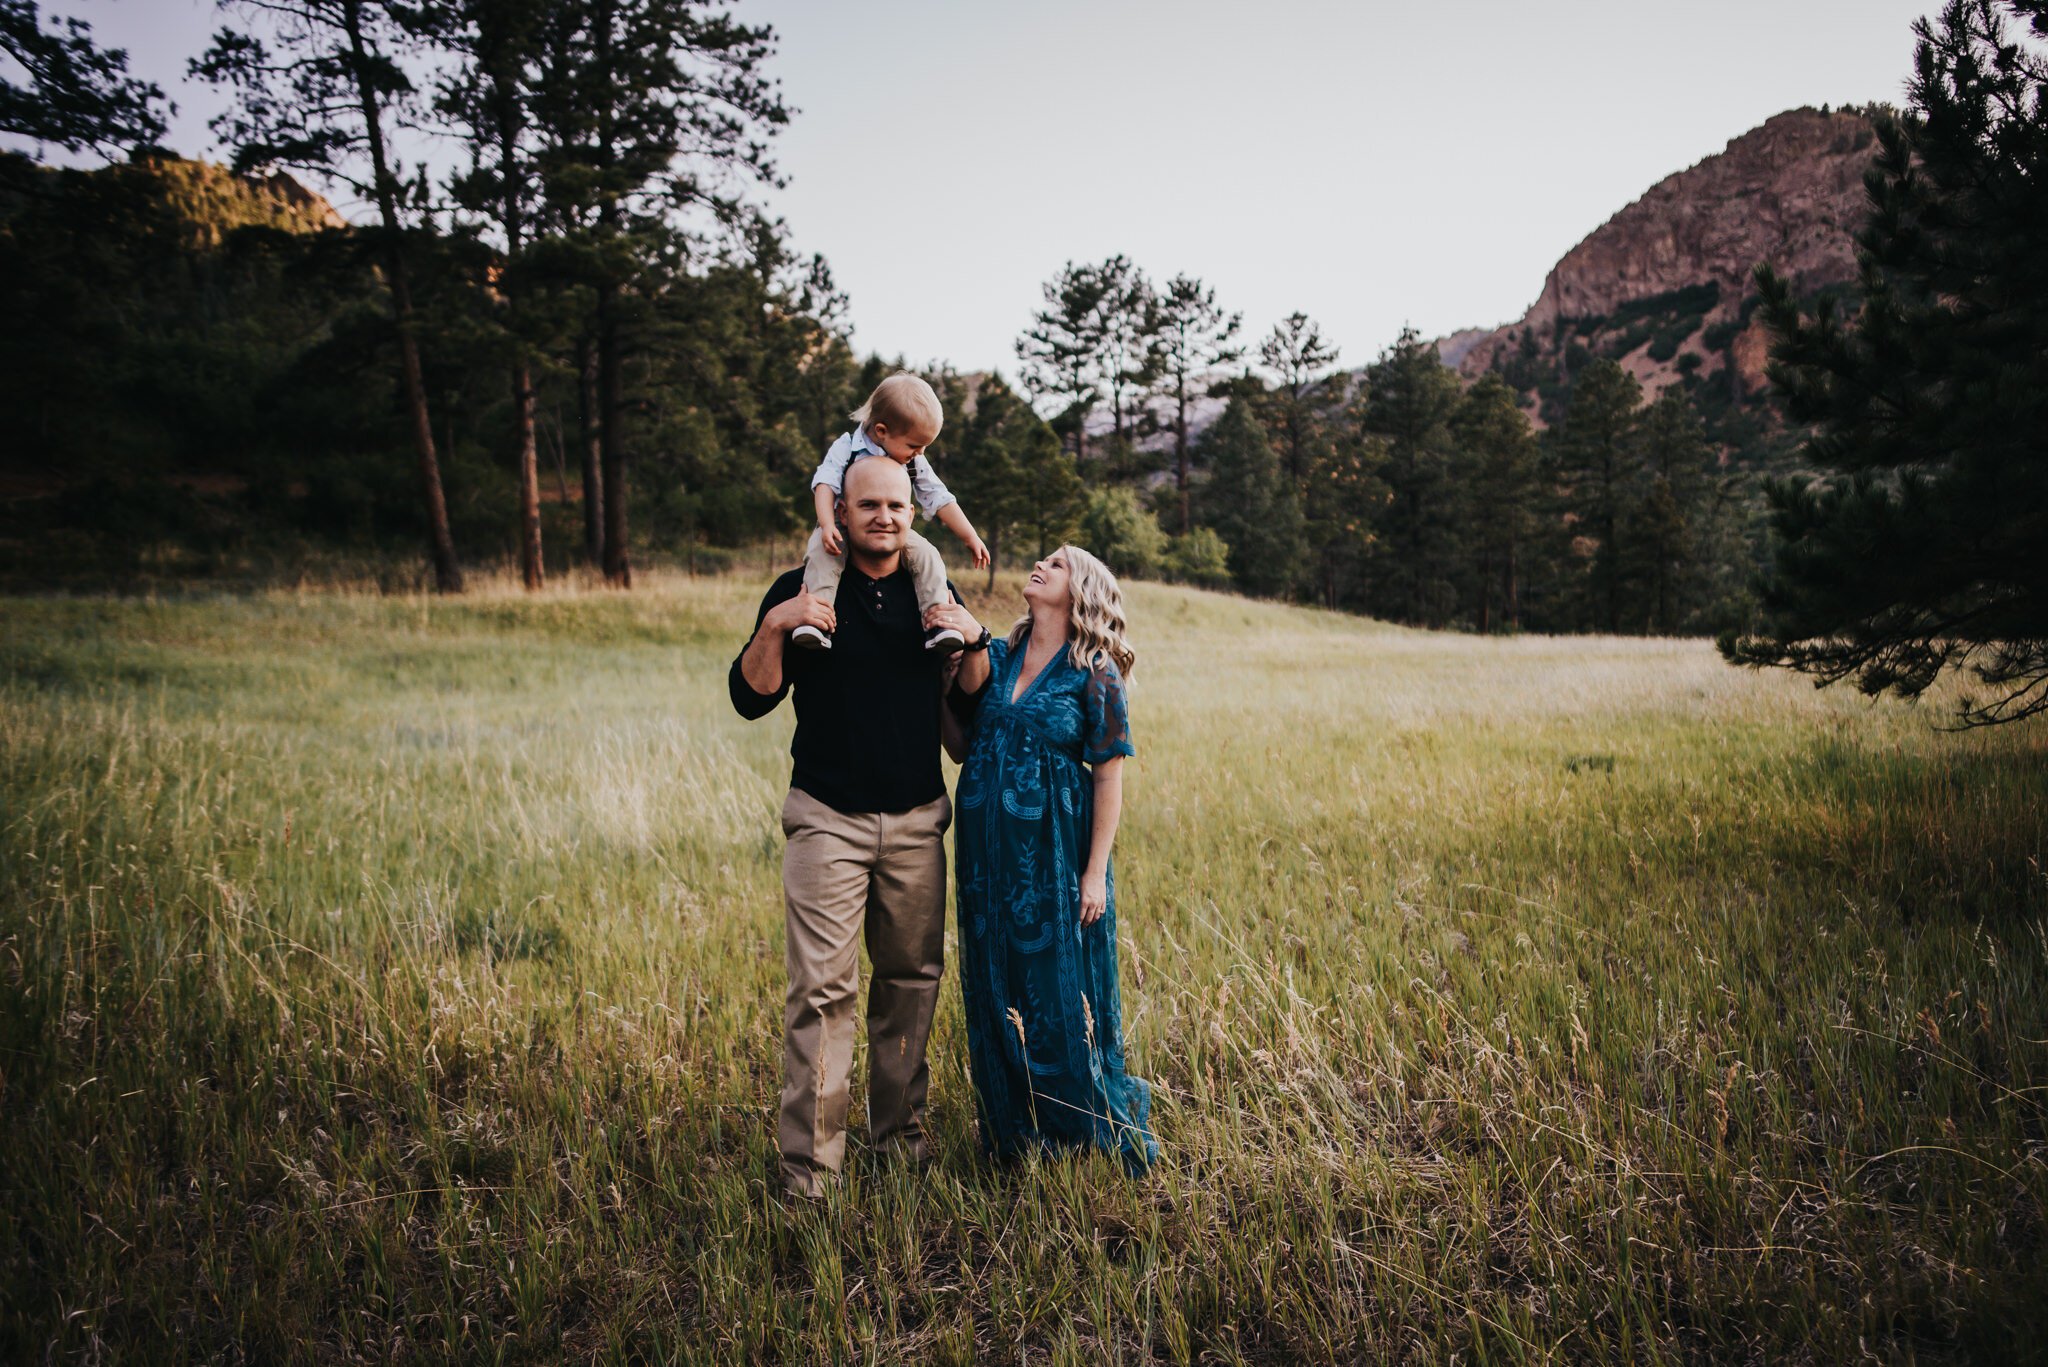 Elliott+Maternity+Family+Session+Colorado+Springs+Colorado+Cheyenne+Canyon+Mountains+Fields+Dad+Mother+Son+Pregnant+Wild+Prairie+Photography-03-2020.jpeg